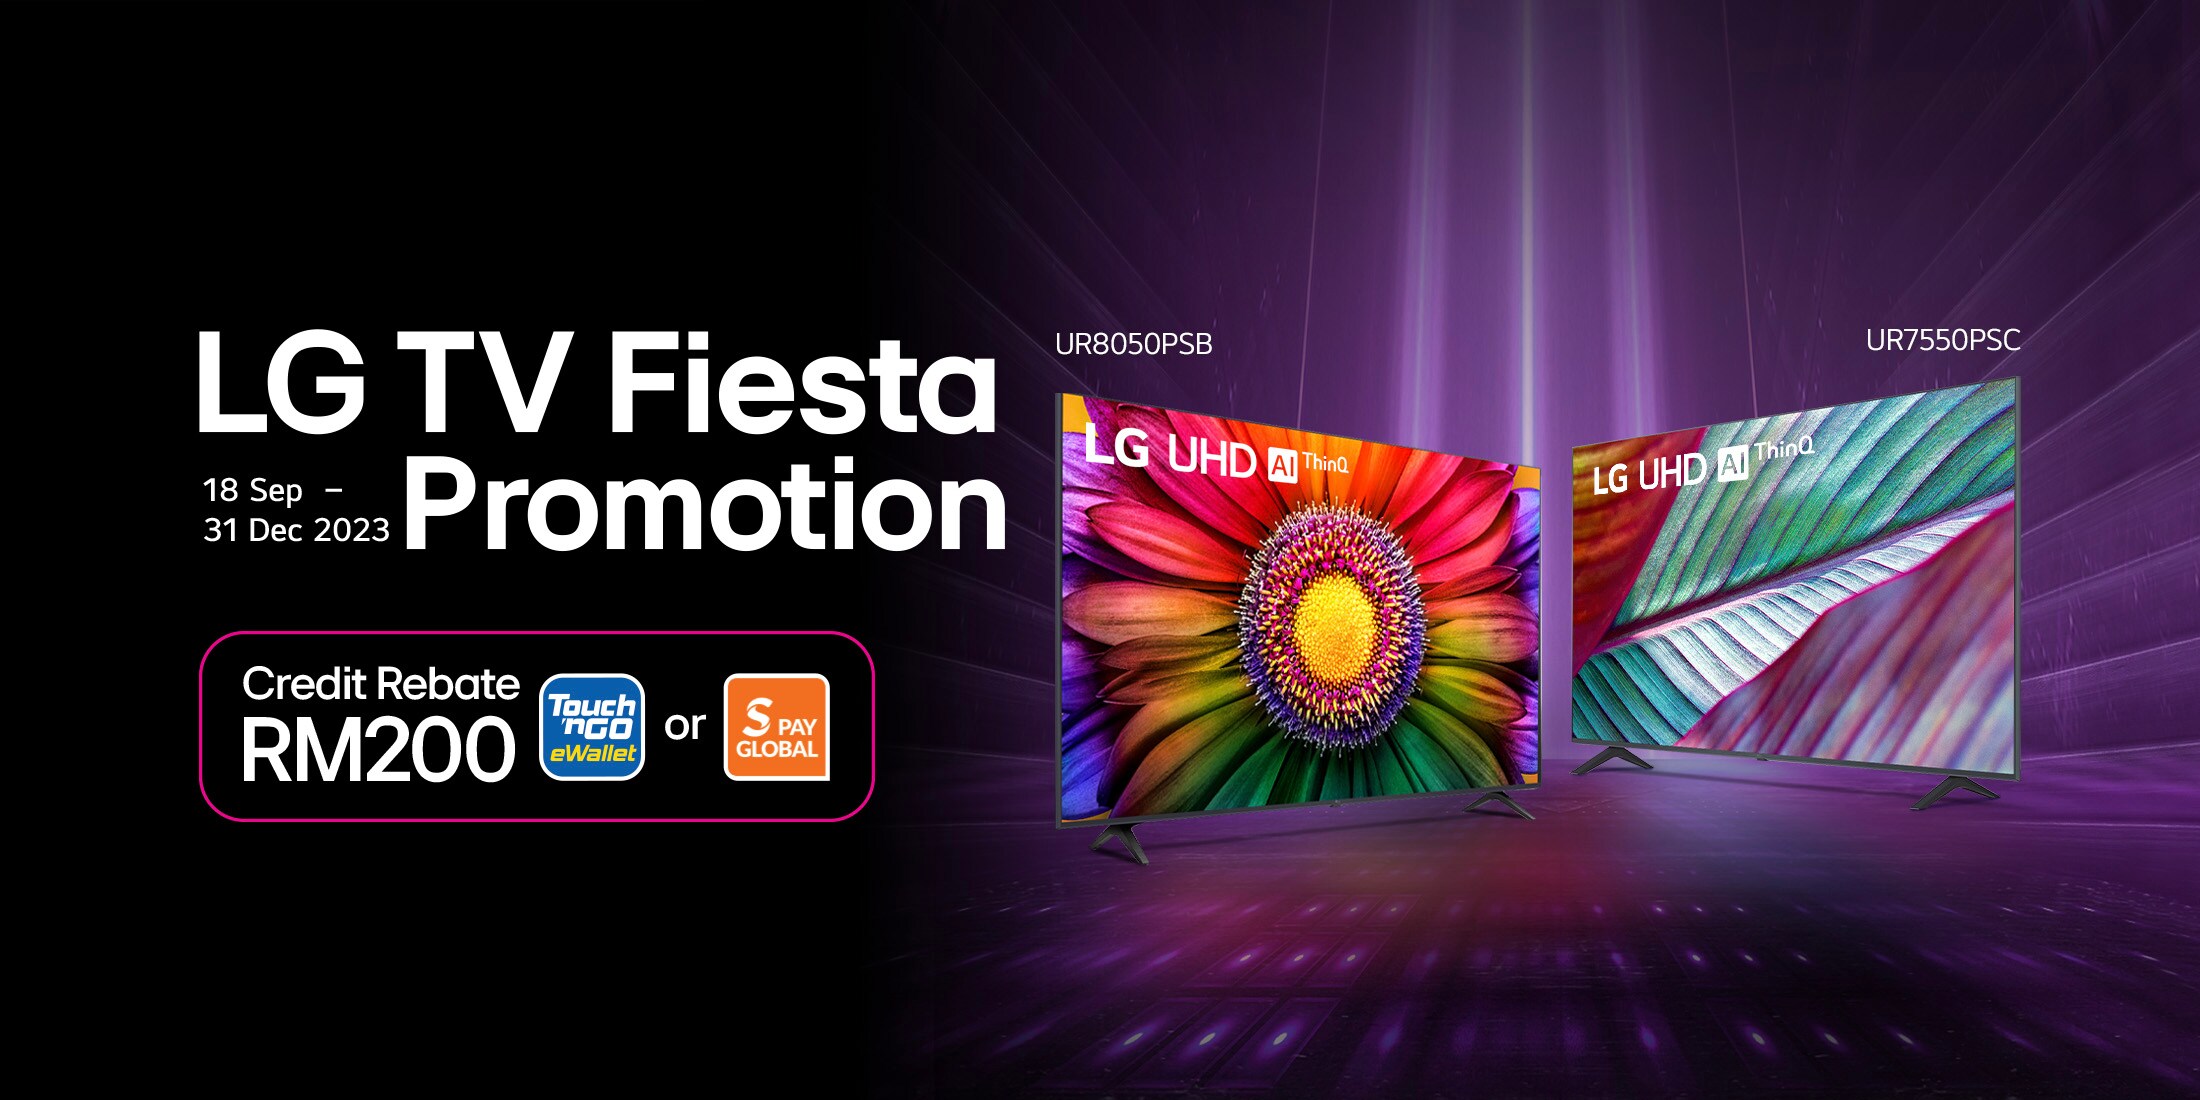 LG TV Fiesta Promotion